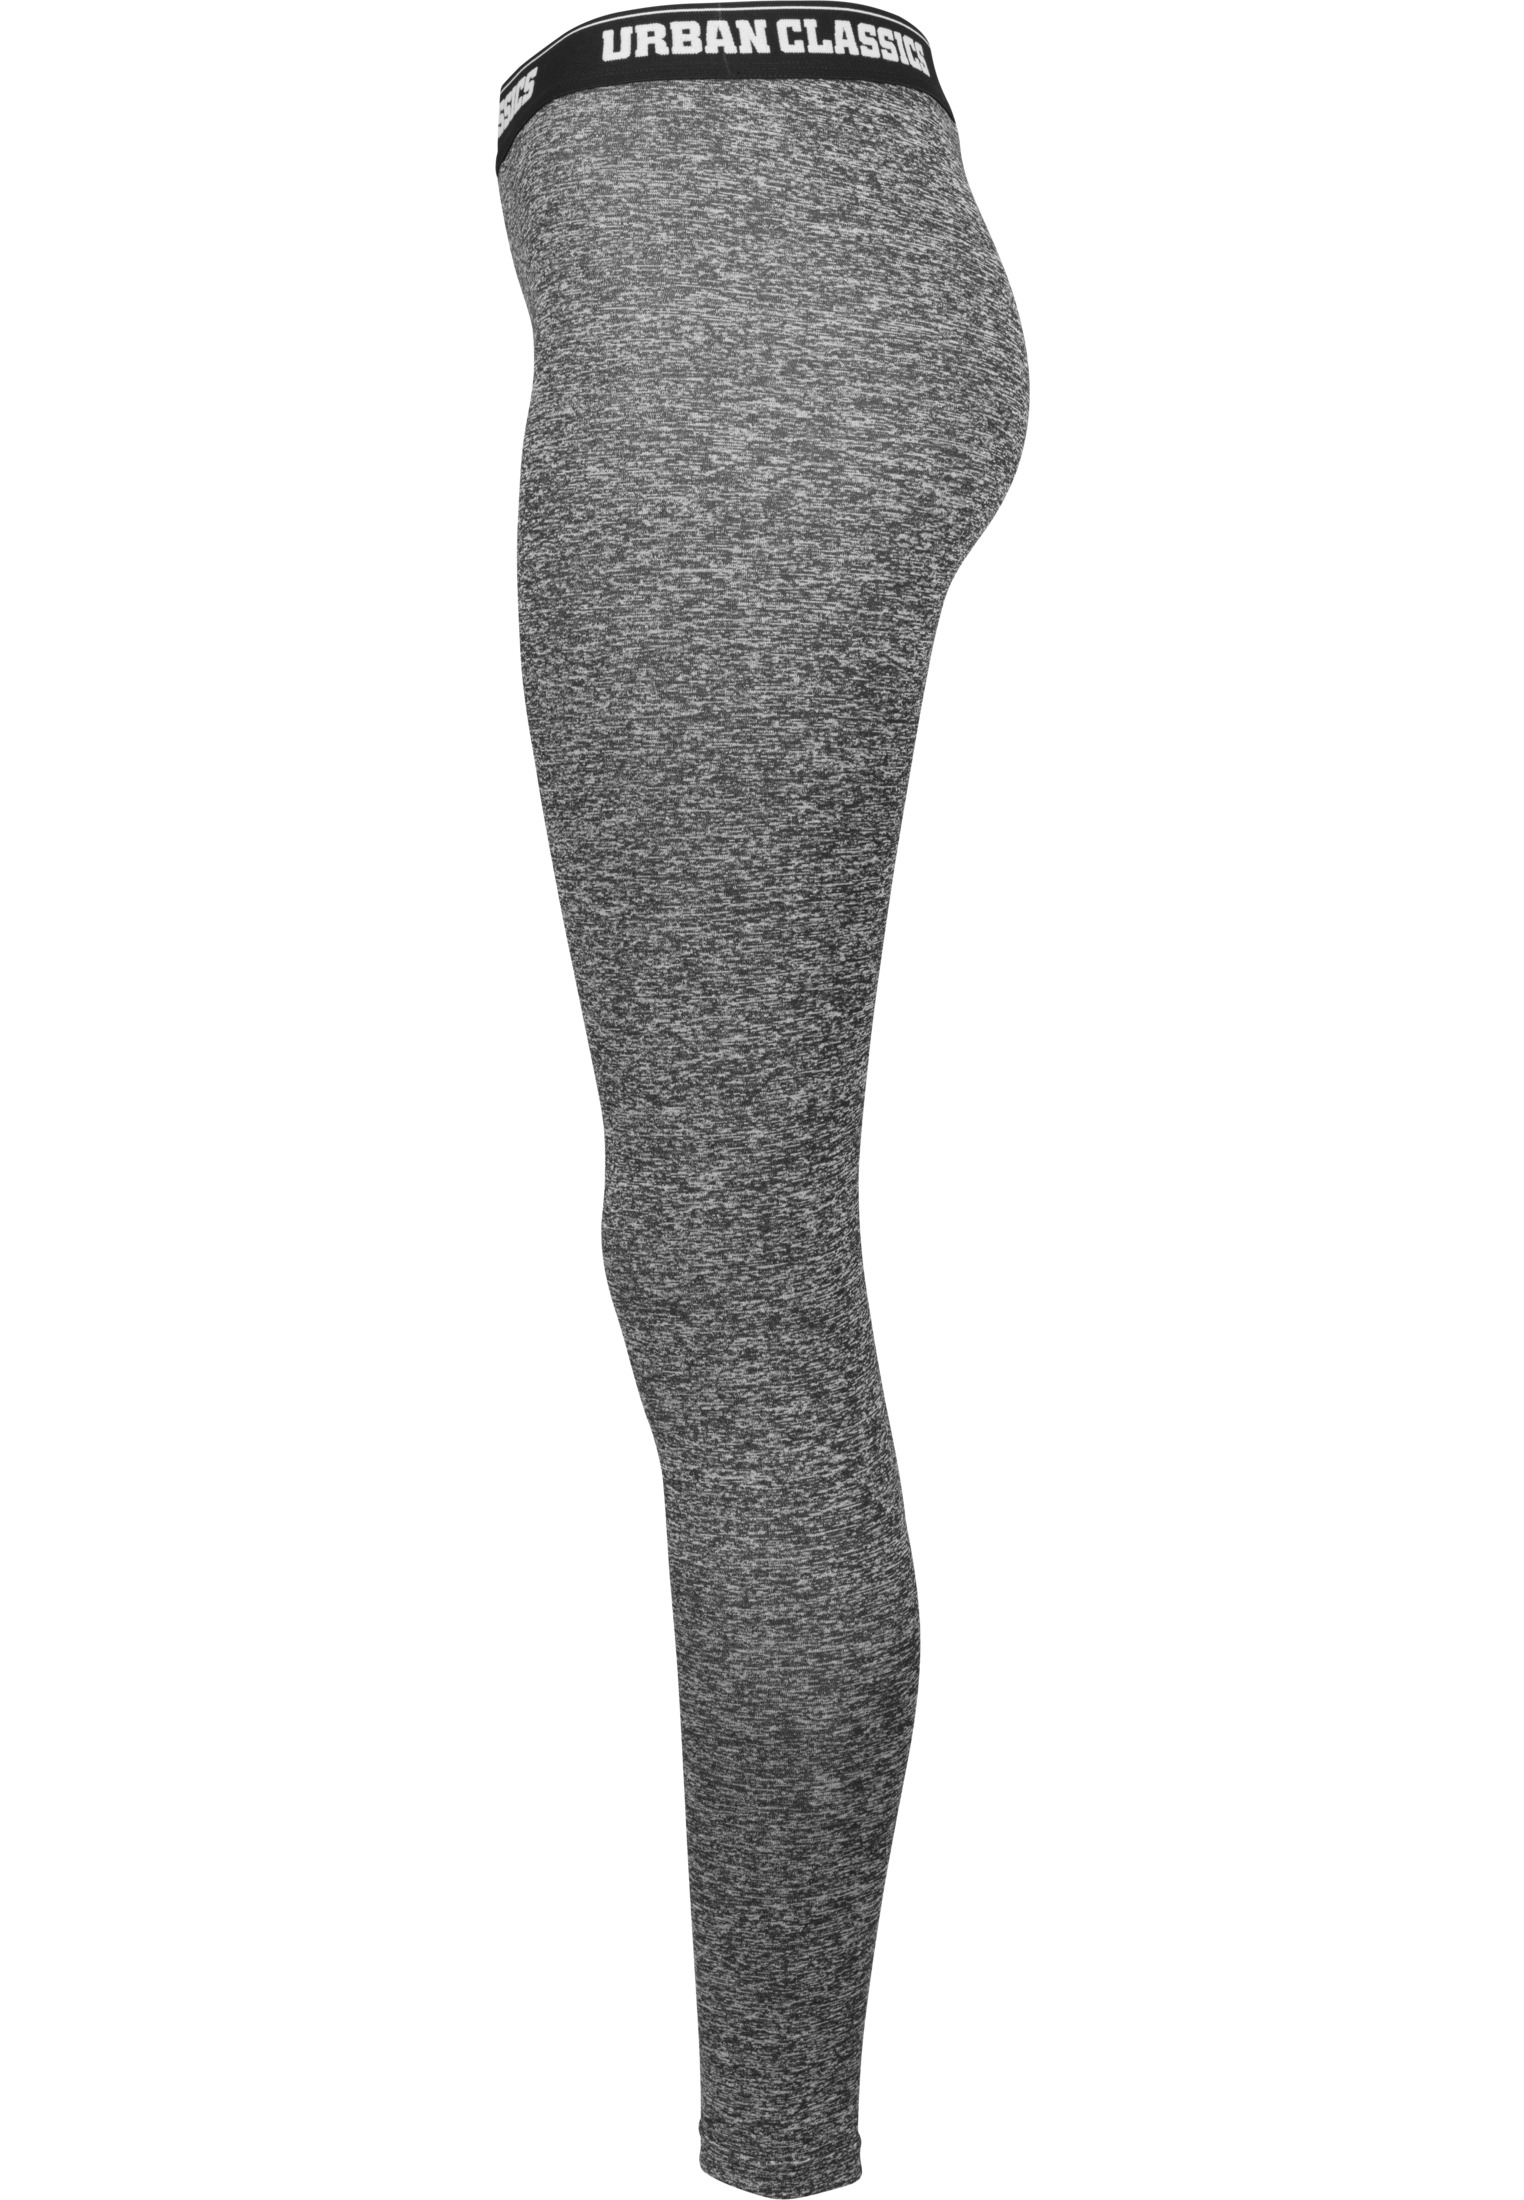 Athleisure Ladies Active Melange Logo Leggings in Farbe charcoal/white/black